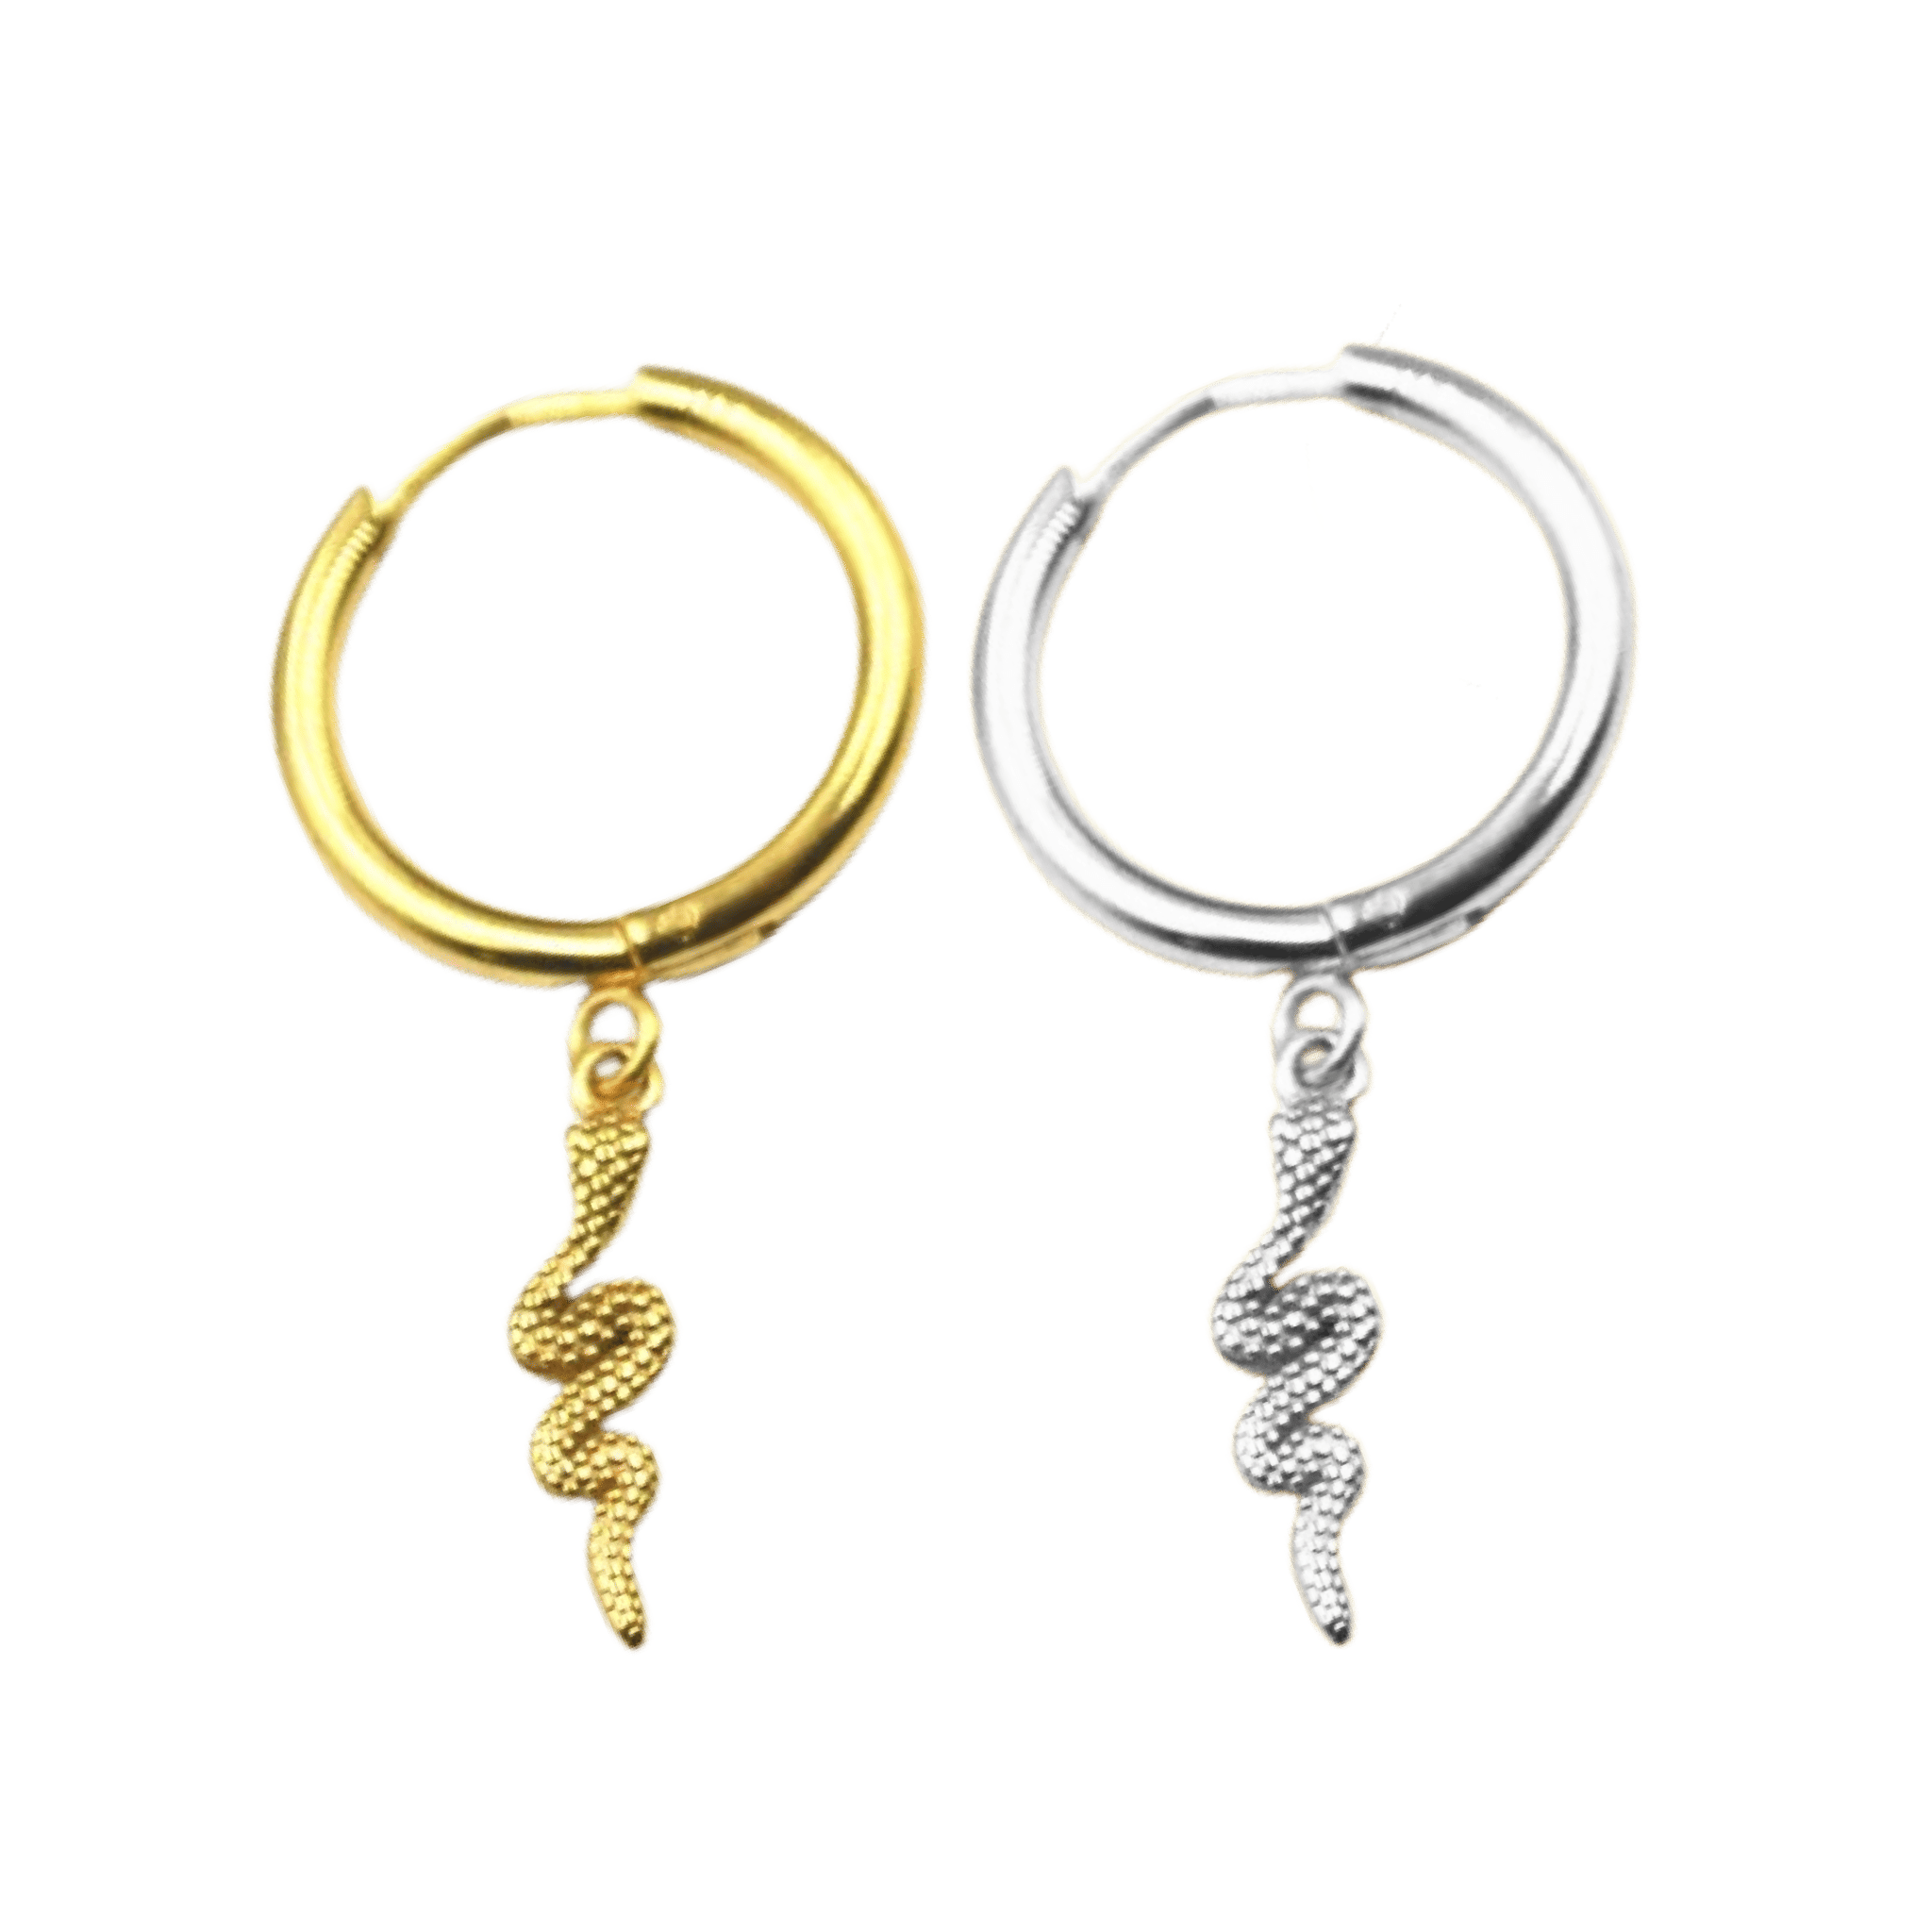 dangling snake clicker stainless steel piercing jewelry